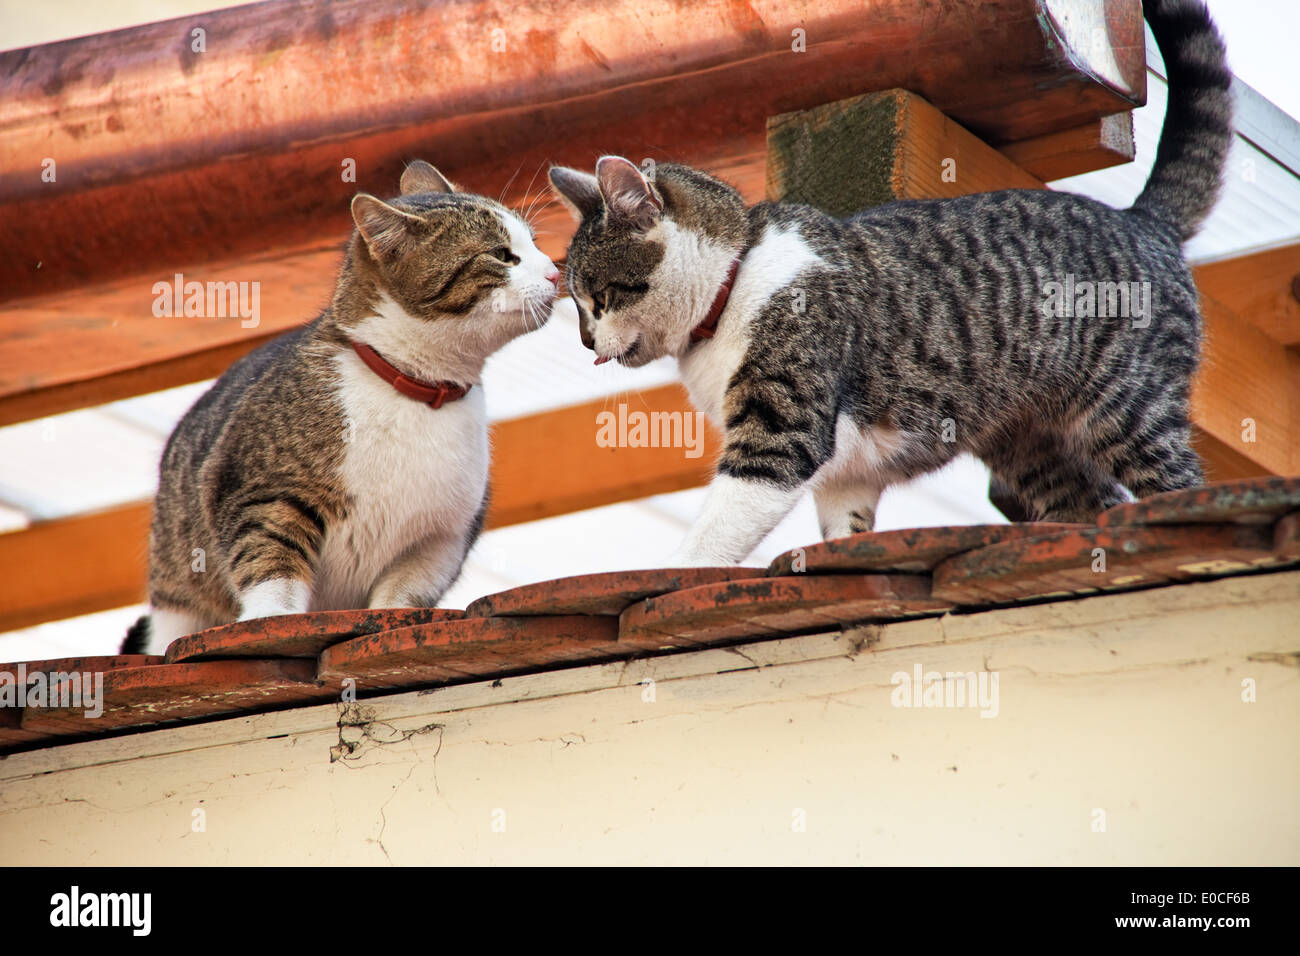 Two cats play on the roof of a house, Zwei Katzen spielen auf dem Dach eines Hauses Stock Photo